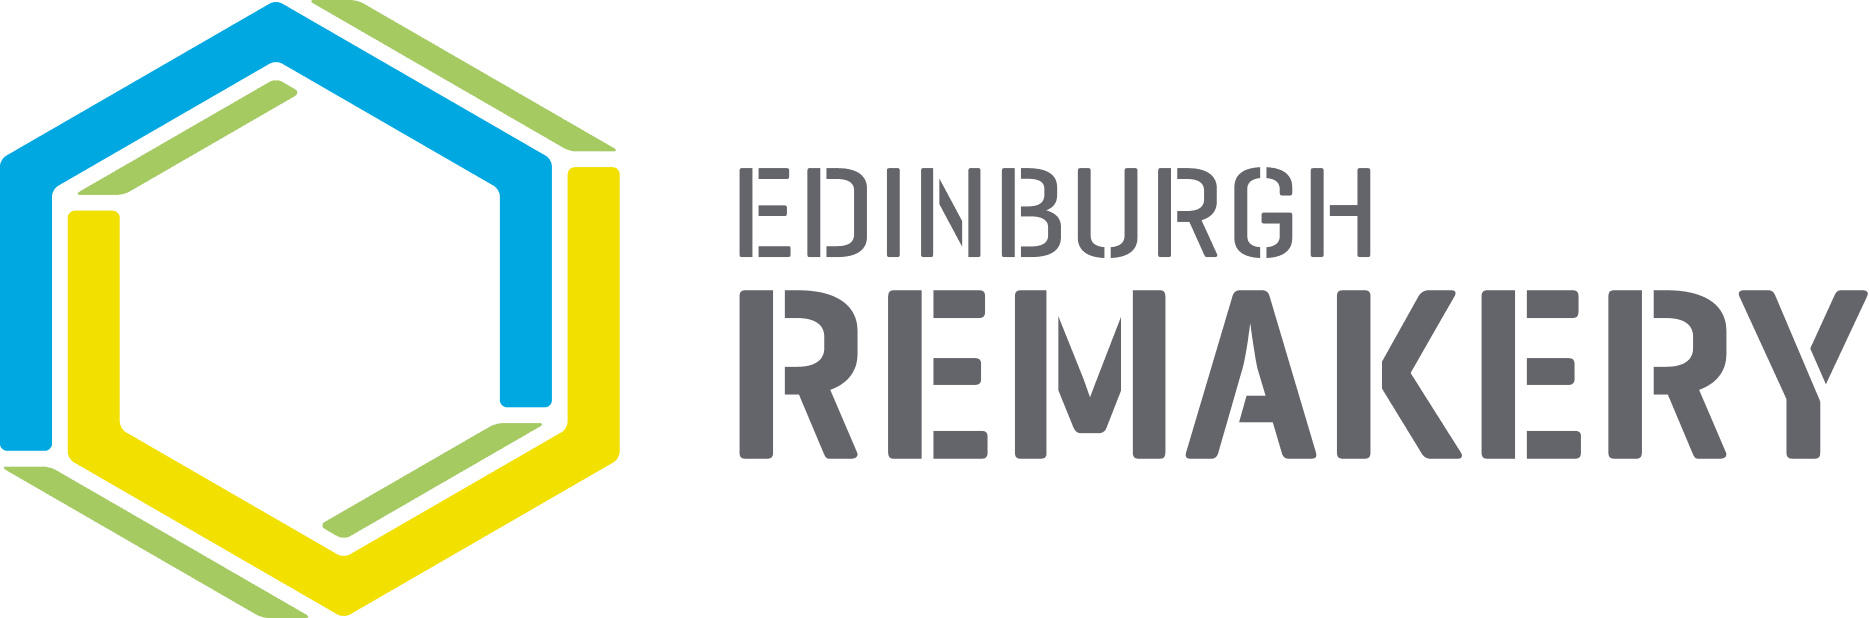 Edinburgh-Remakery-logo-CMYK